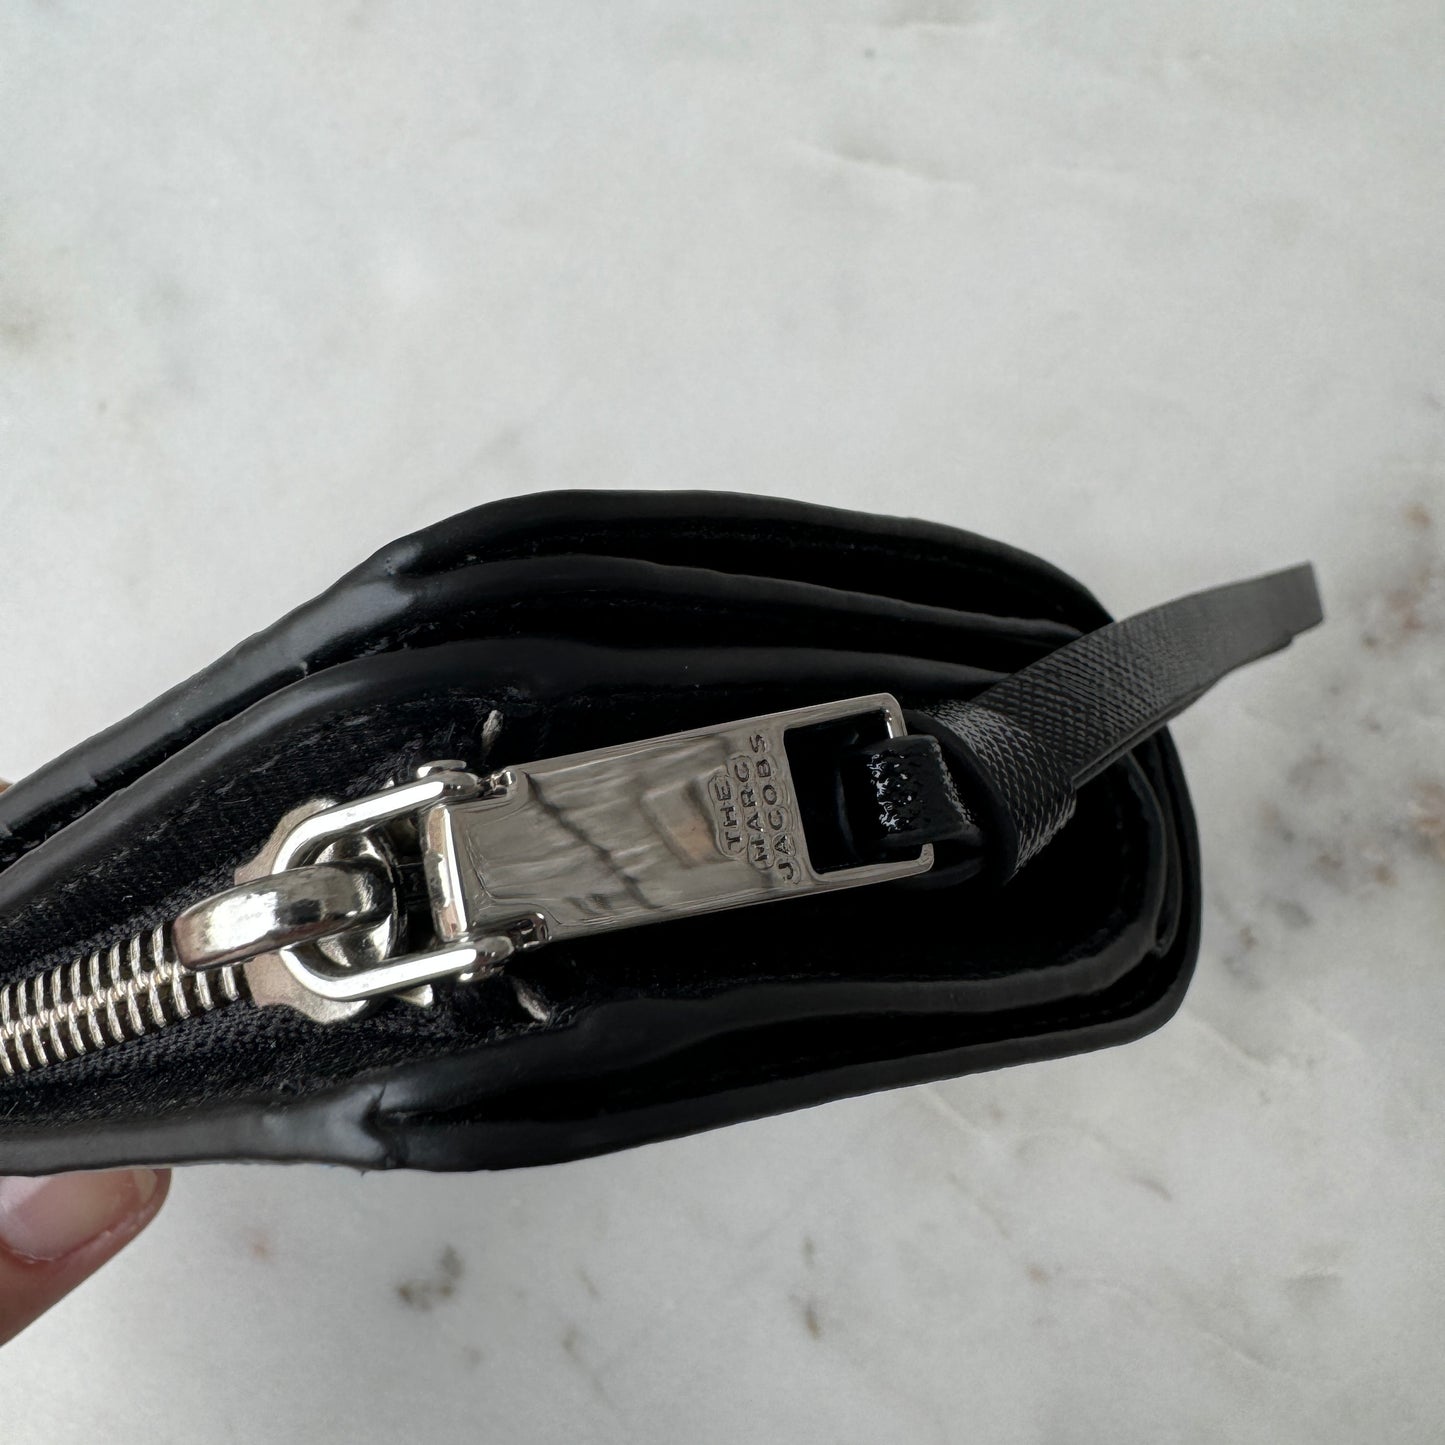 Marc Jacobs x Peanuts Snoopy Collaboration Snapshot Zipper Folding Wallet